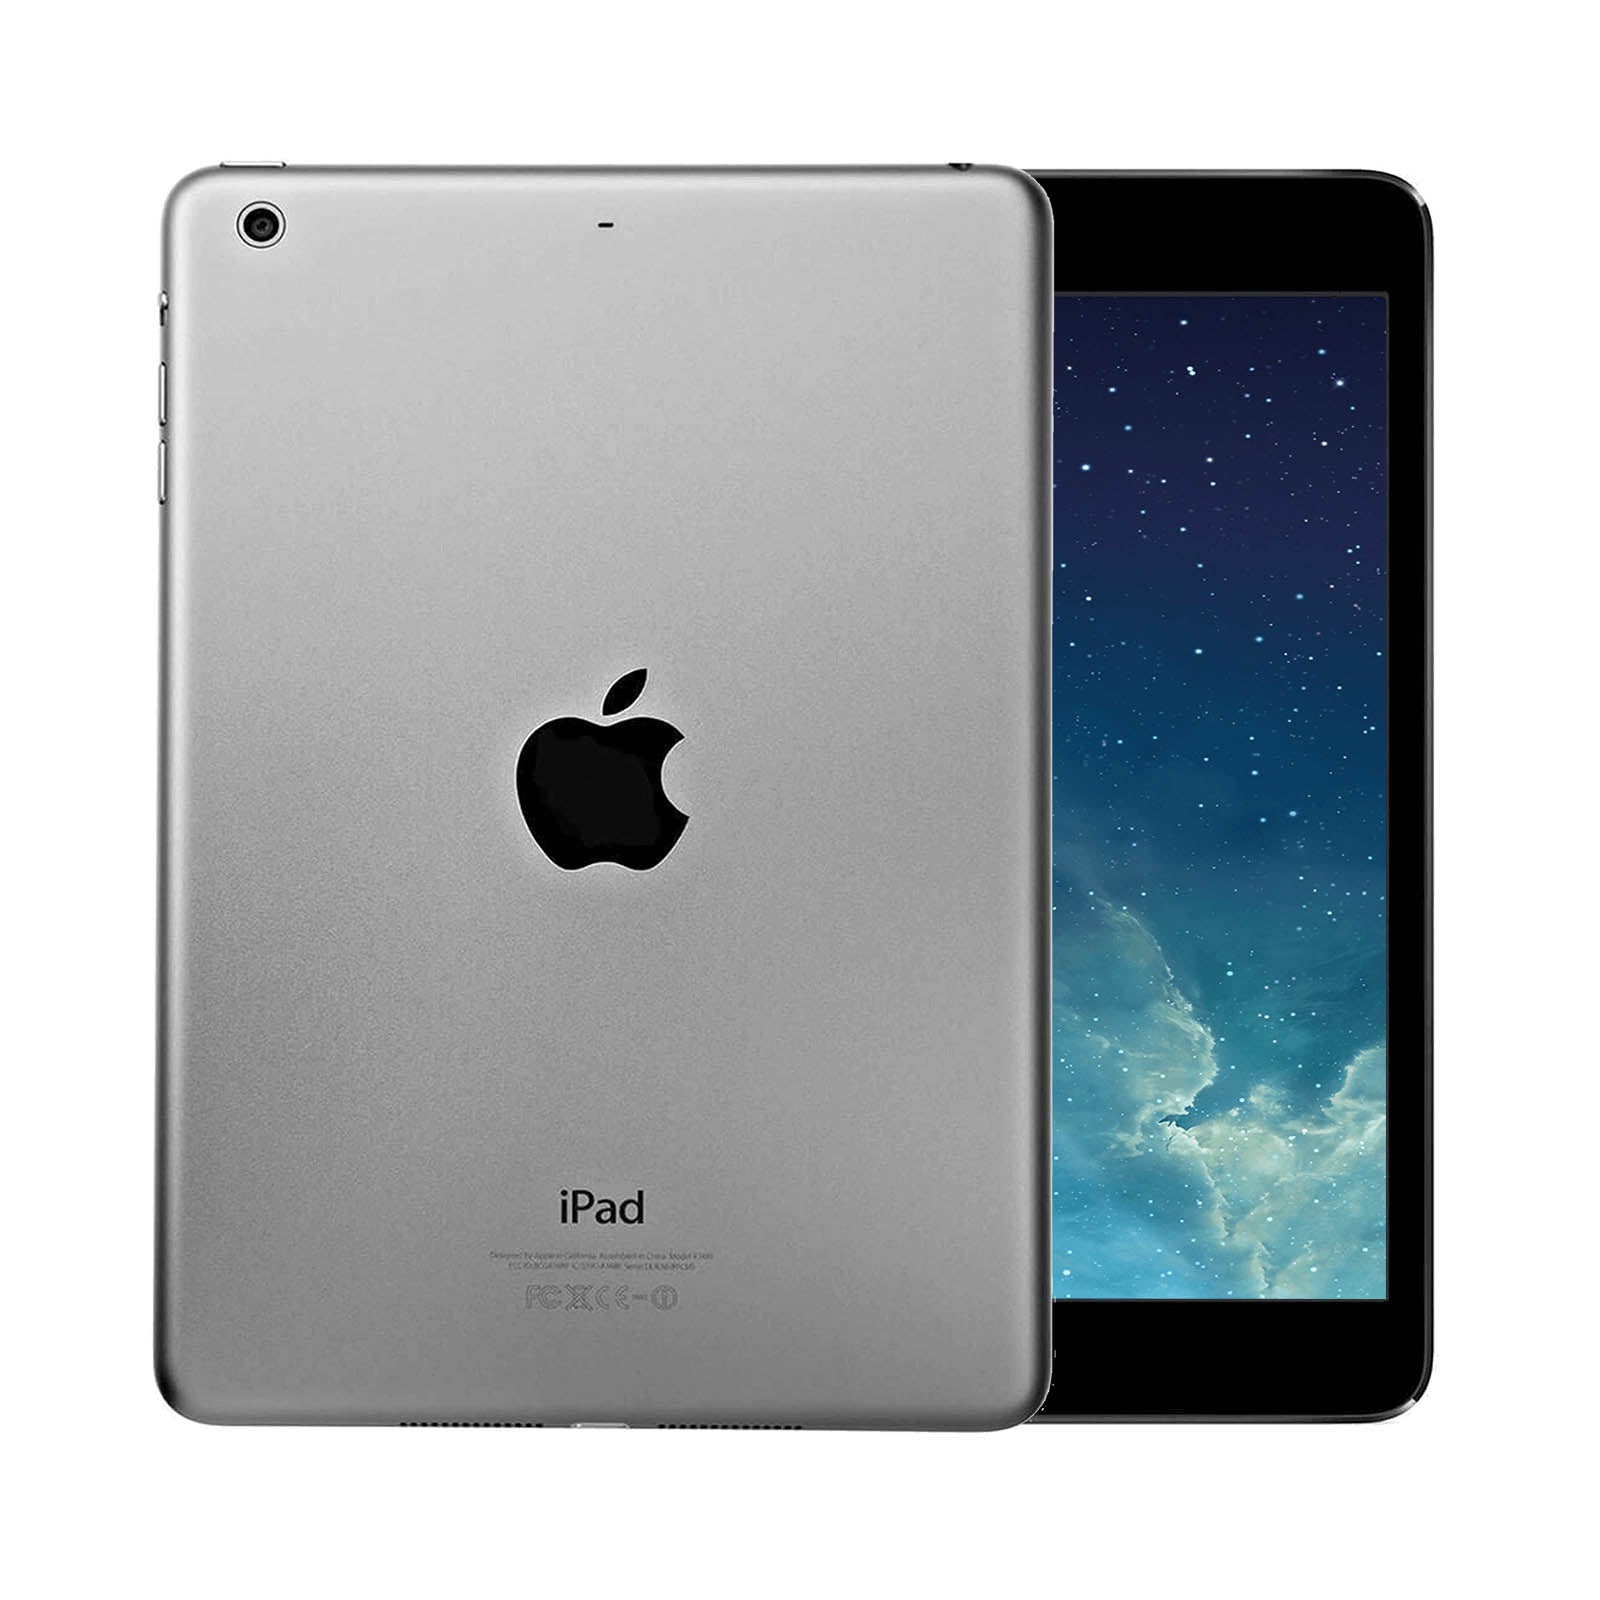 Apple iPad Air 64GB Space Grey Very Good - Unlocked